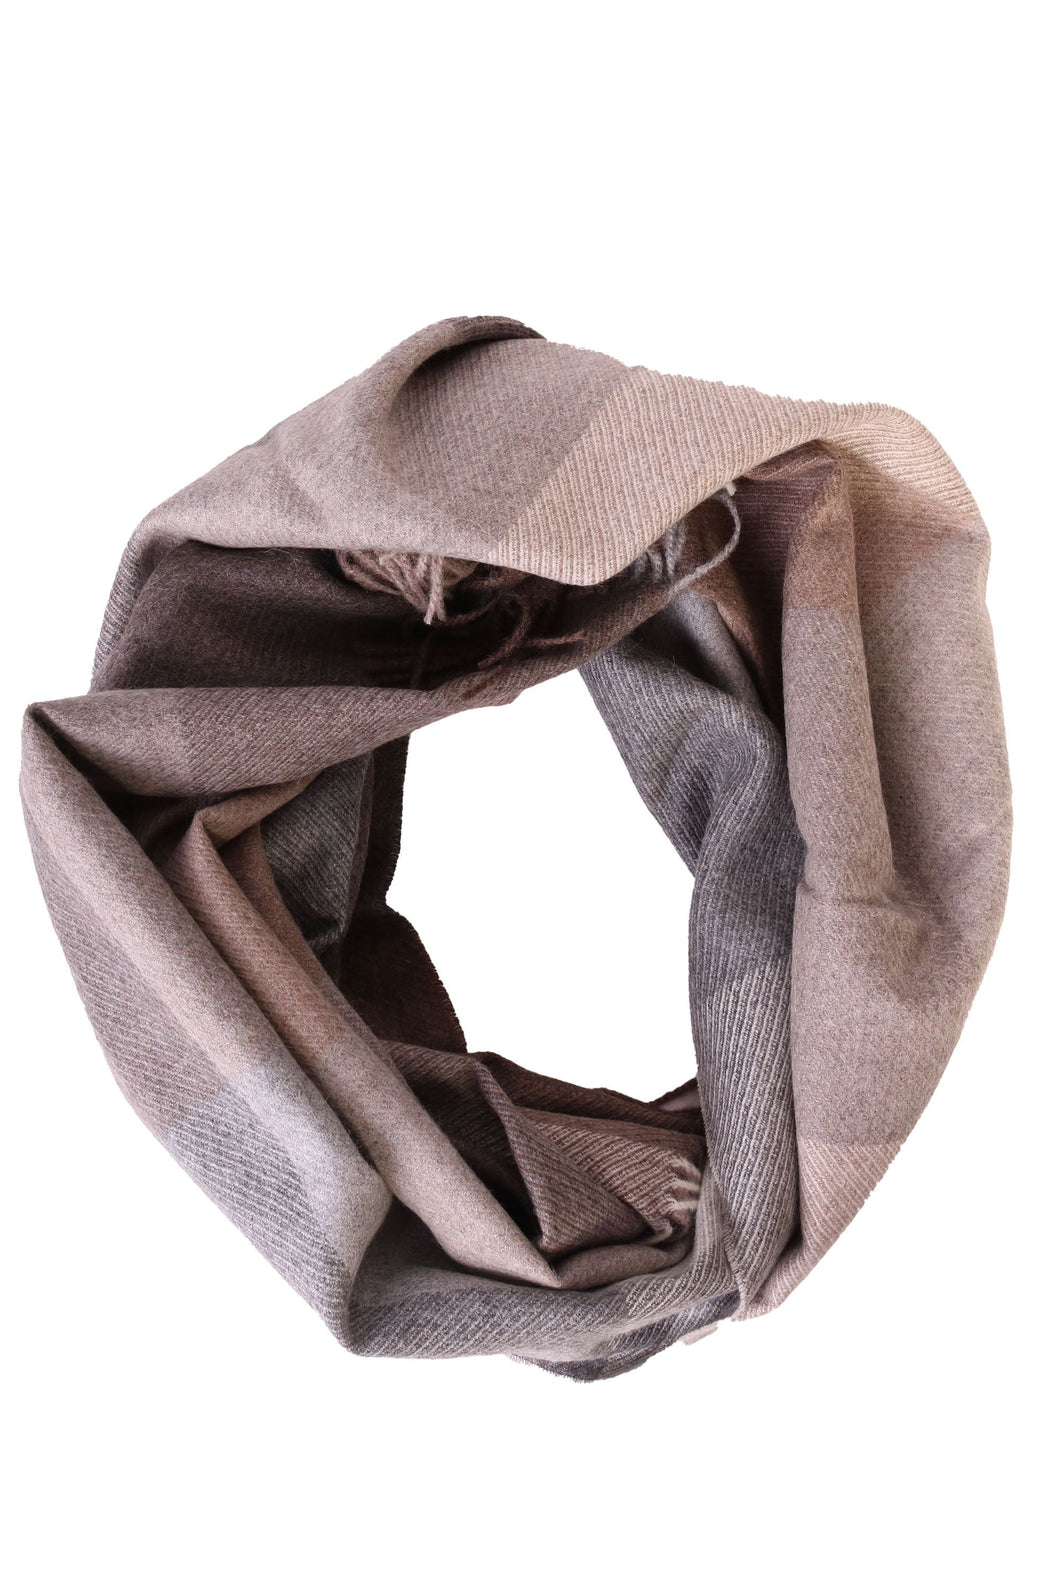 Alpaca wool beige-grey checked big scarf - GreatNaturalAlpaca